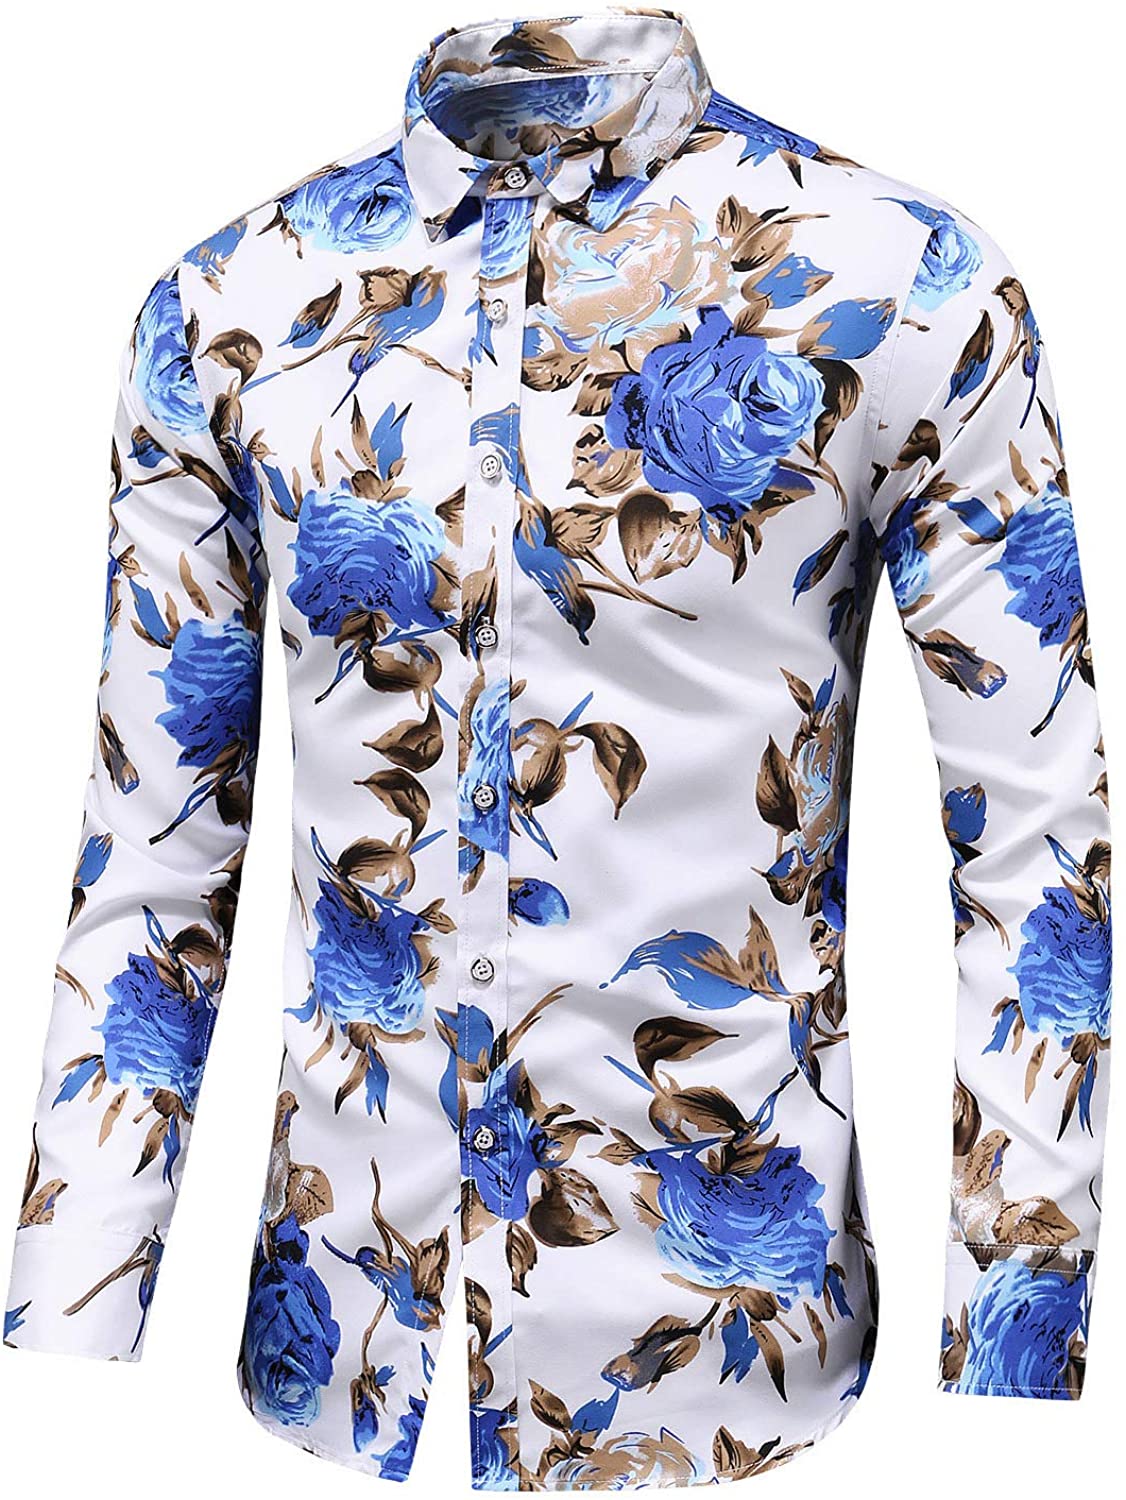 LEFTGU Men's Slim fit Floral Printed Beach Hawaiian Button-Down Dress Shirt 